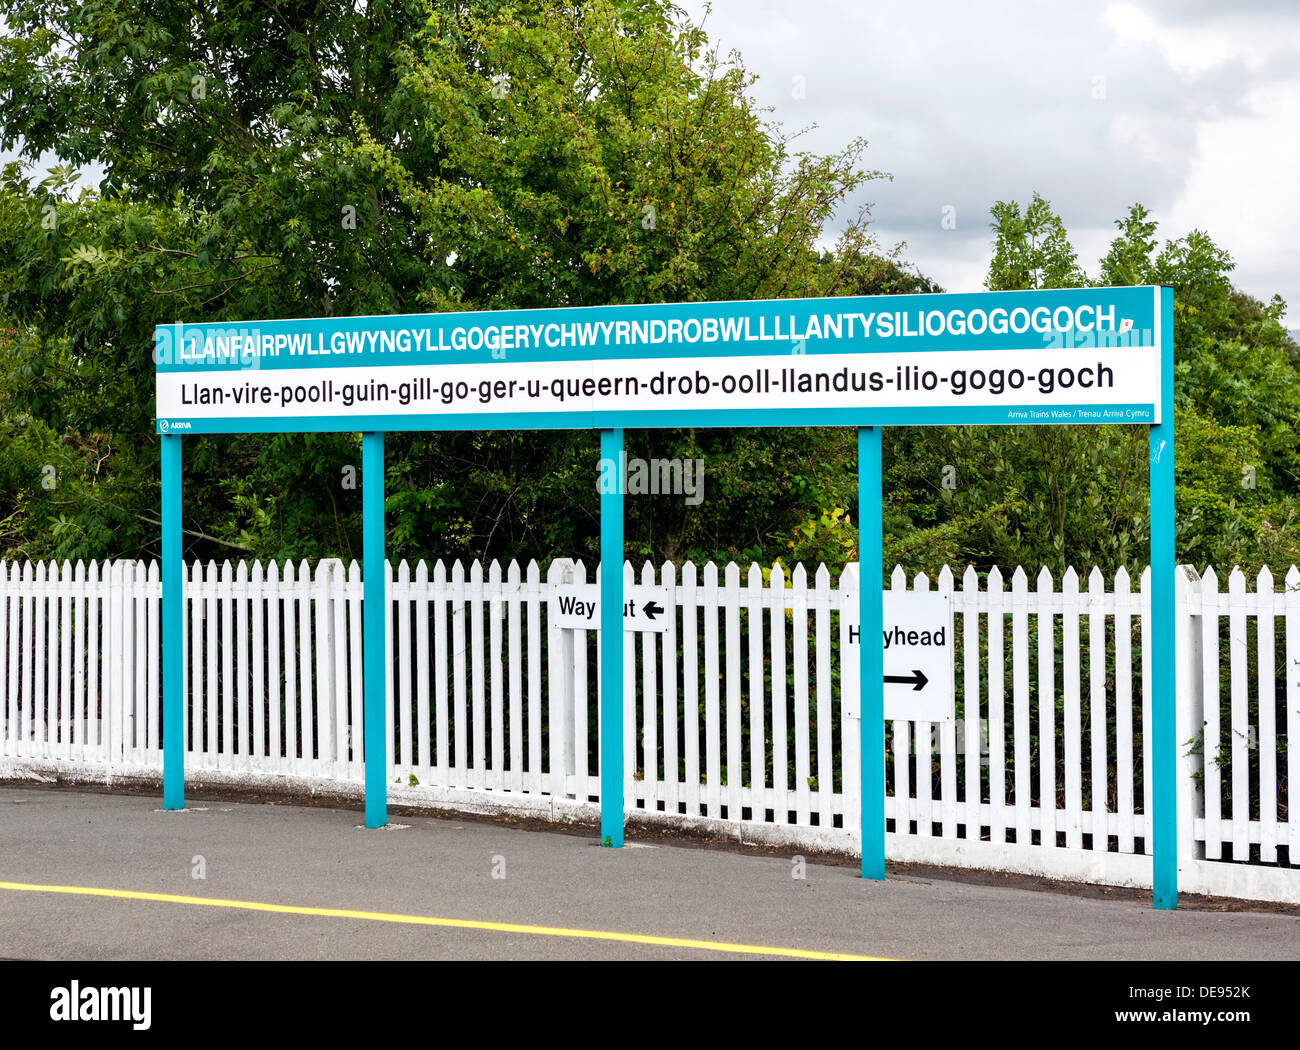 Station sign for longest place name in the UK, Llanfairpwllgwyngyllgogerychwyrndrobwllllantysiliogogogoch, Anglesey, Wales, UK Stock Photo